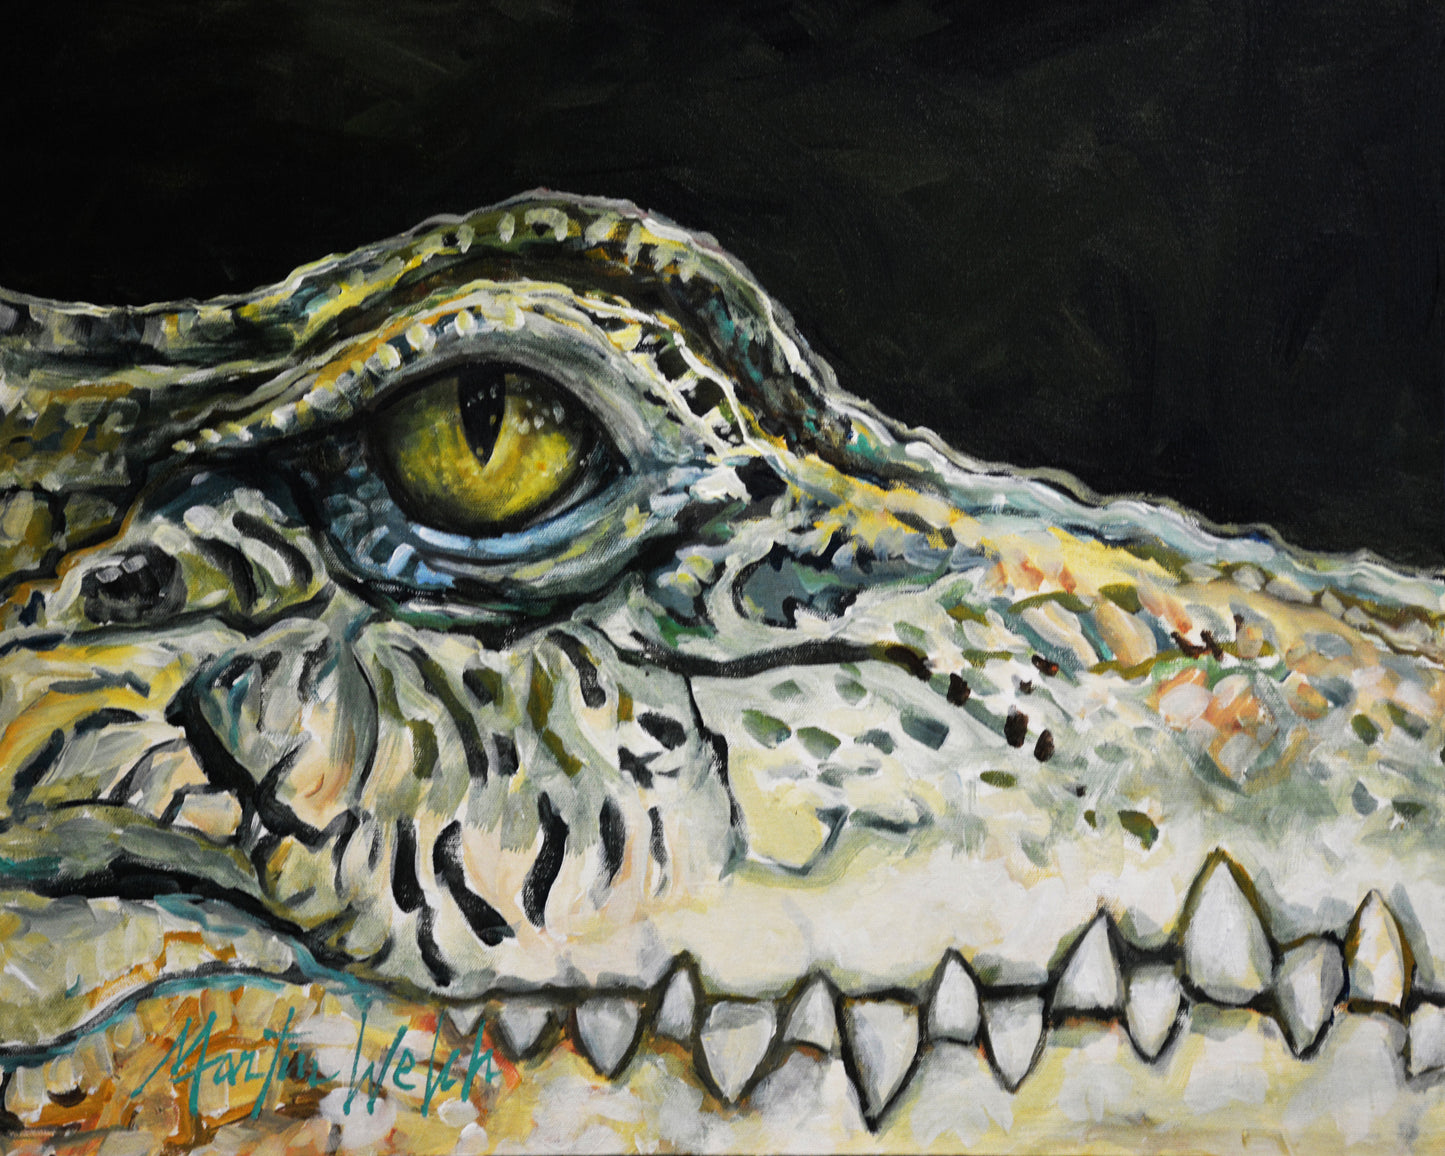 Bite Me - Alligator Head - 11"x14" Print